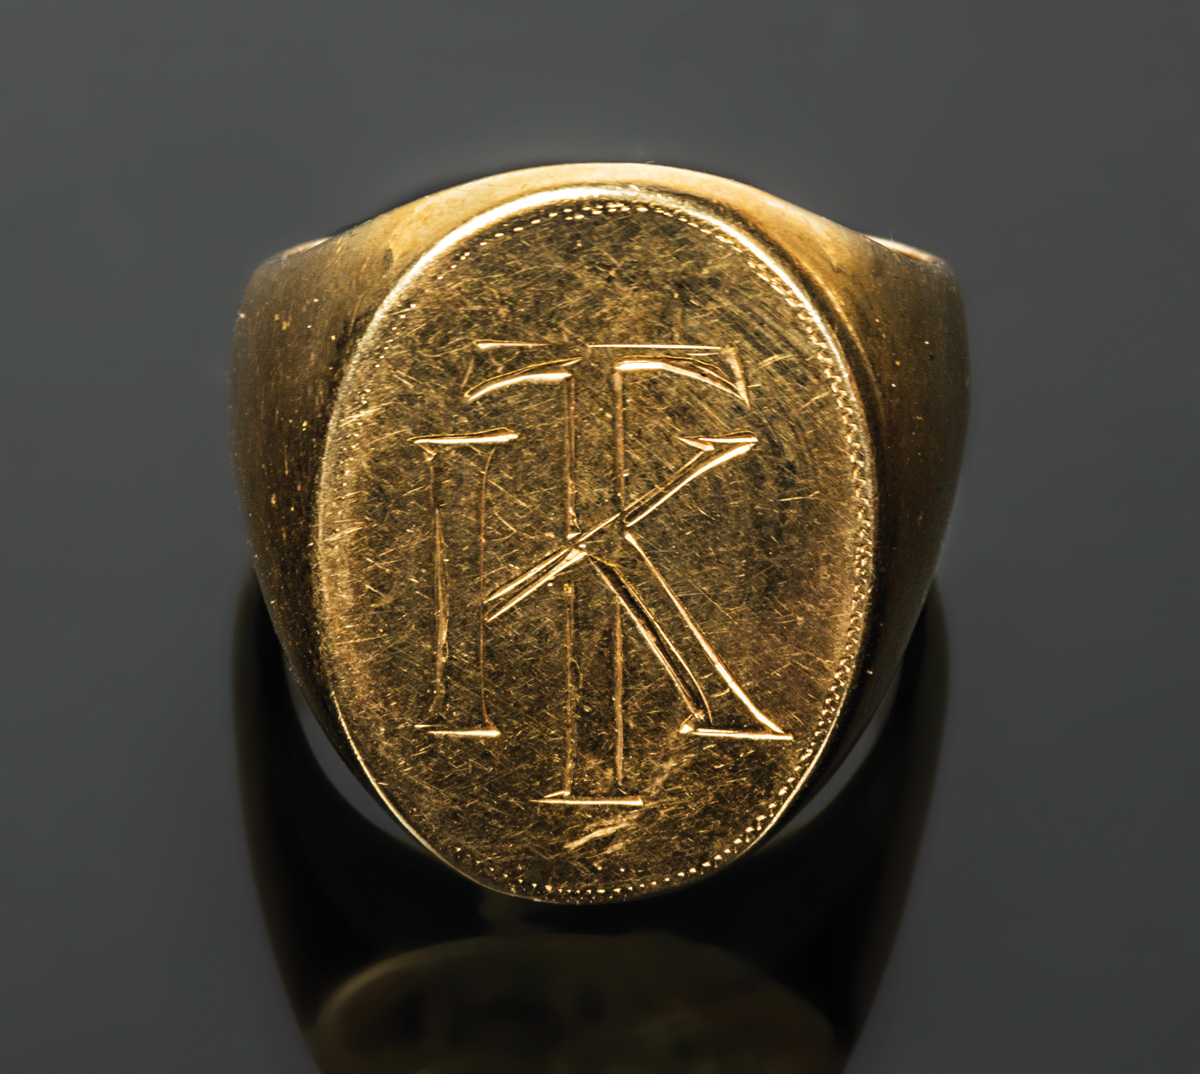 Lot 69B: Gentleman’s Gold Ring – Willis Henry Auctions, Inc.